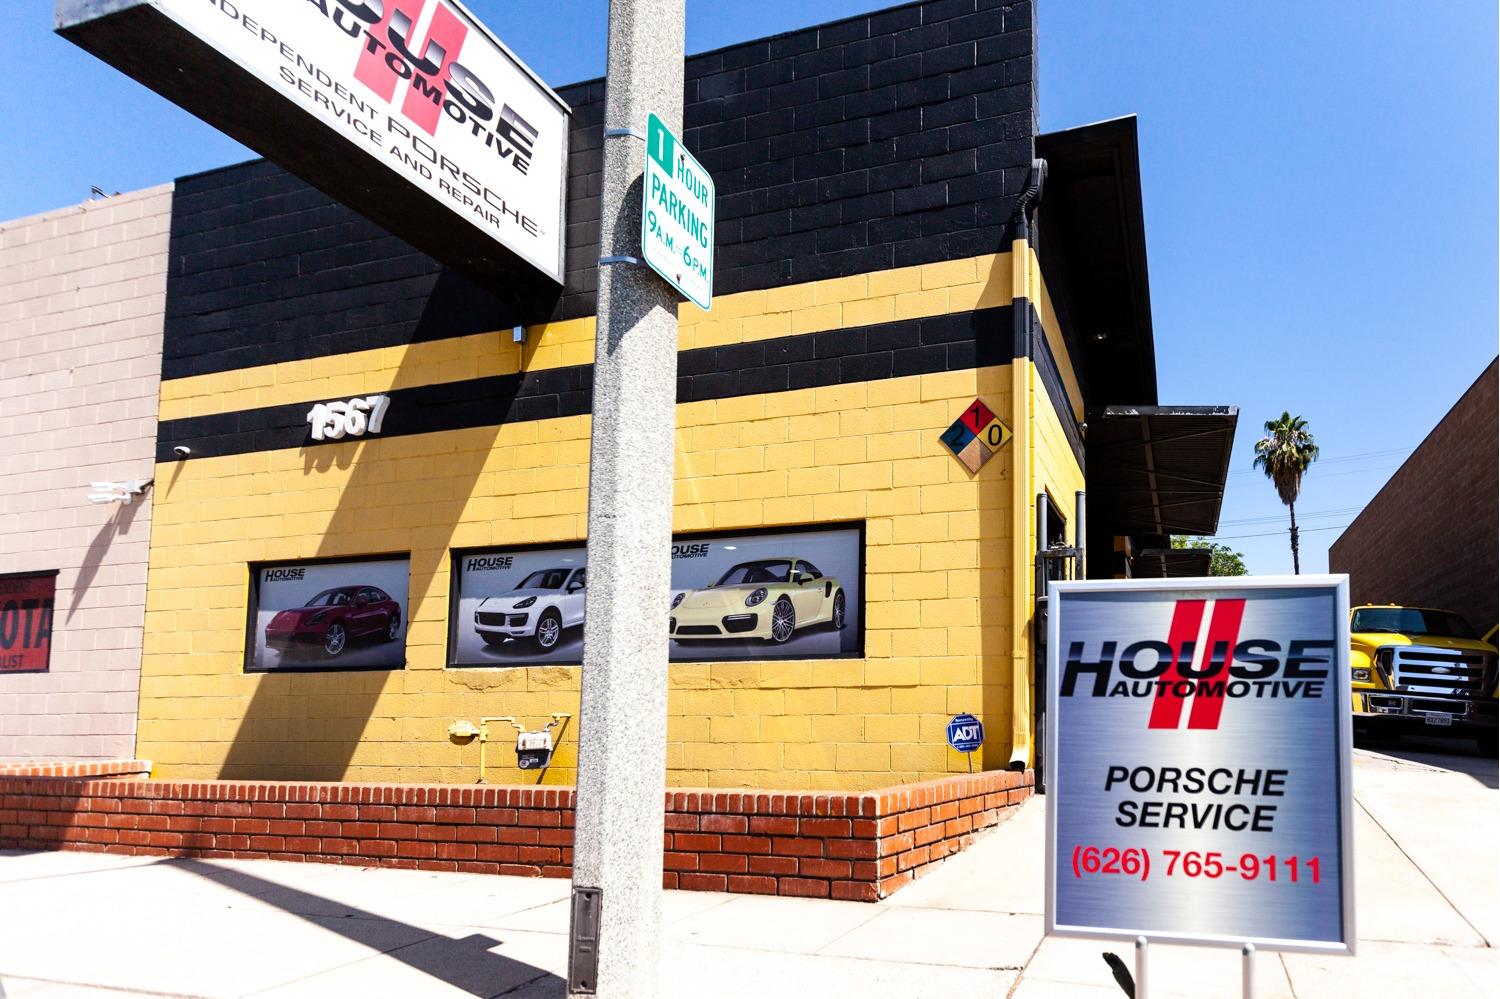 PORSCHE Service - HOUSE Automotive Independent Photo